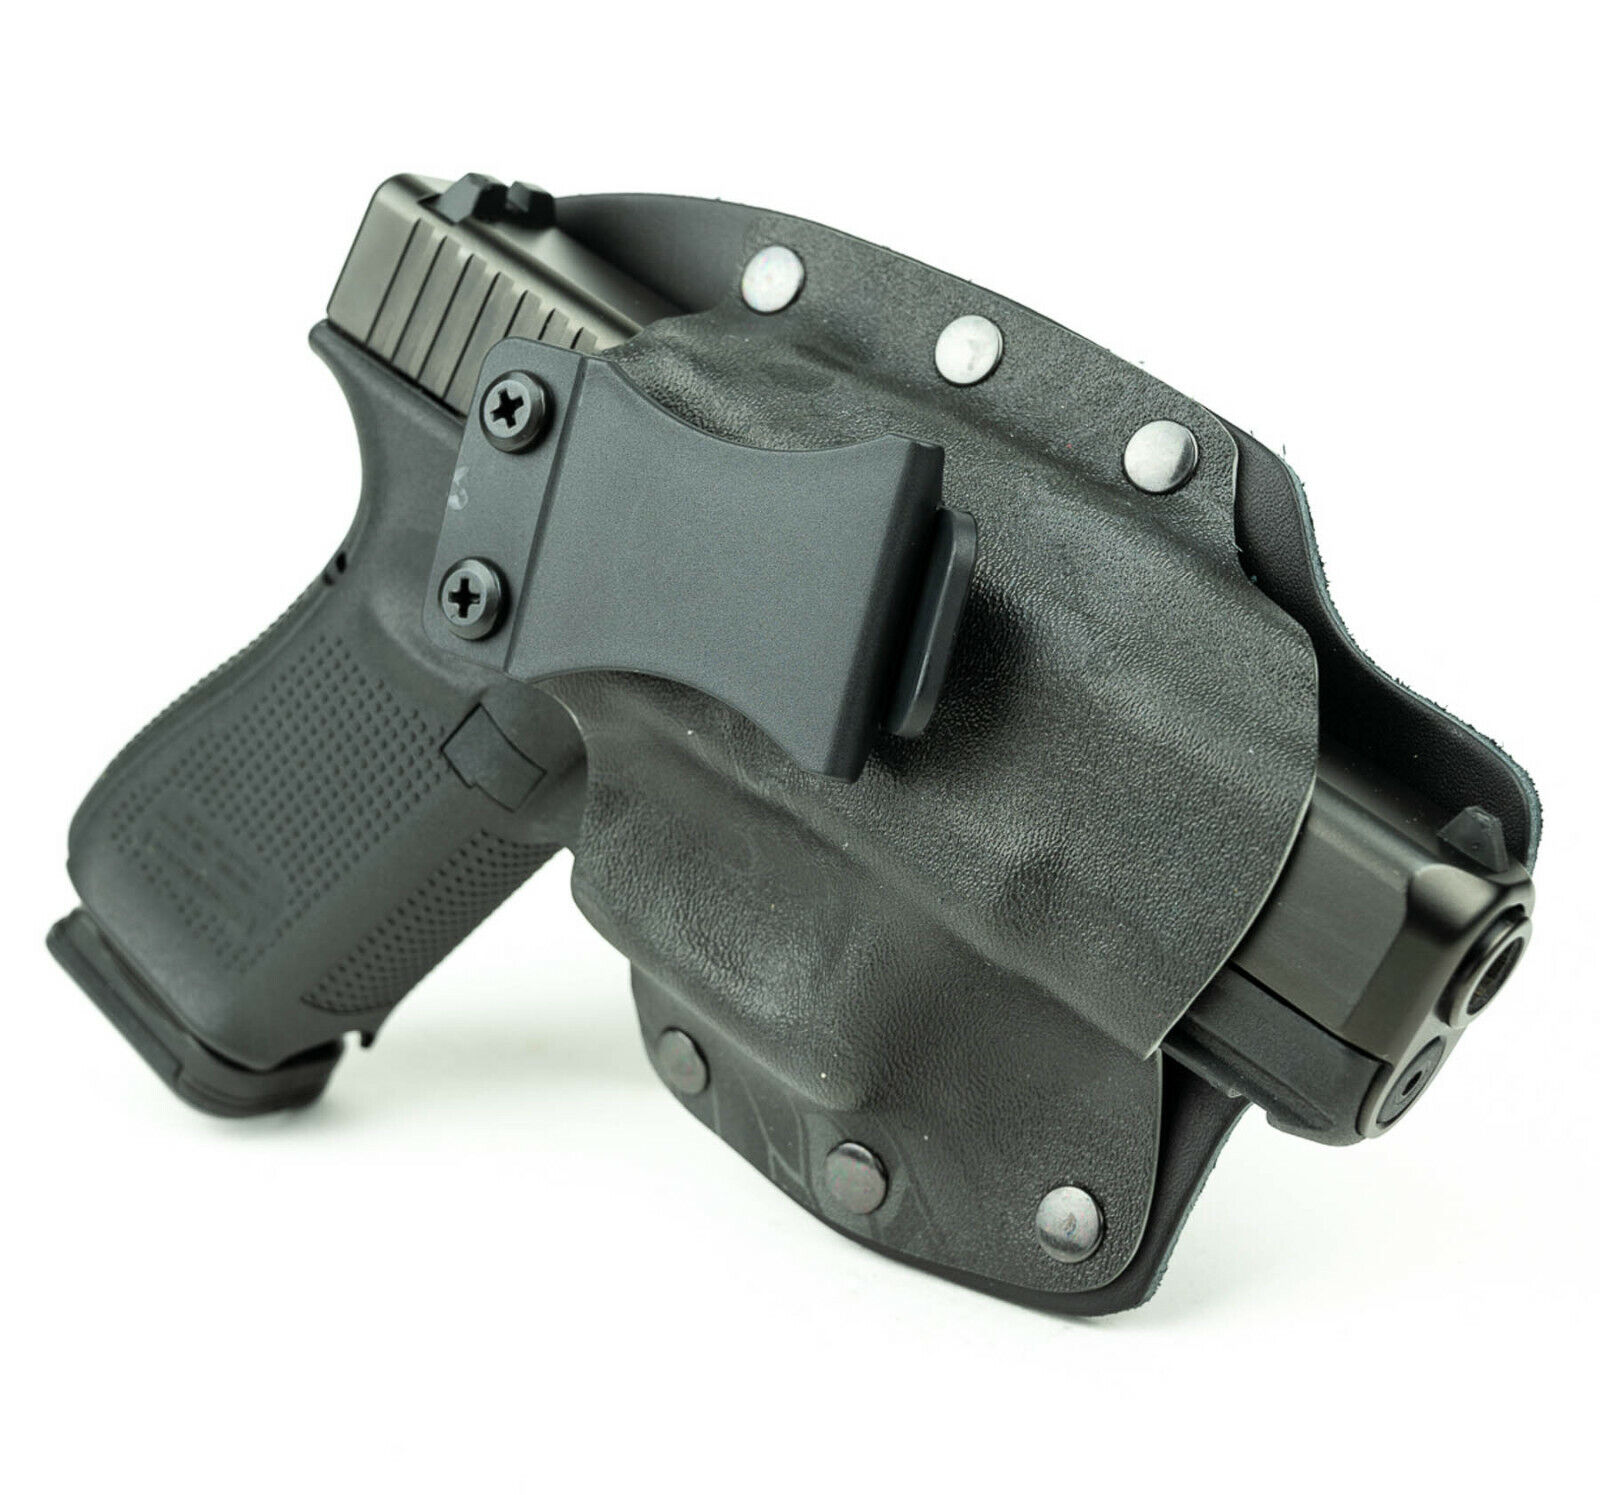 NT Hybrid IWB Holster for SIG Handguns, Kryptek Typhon